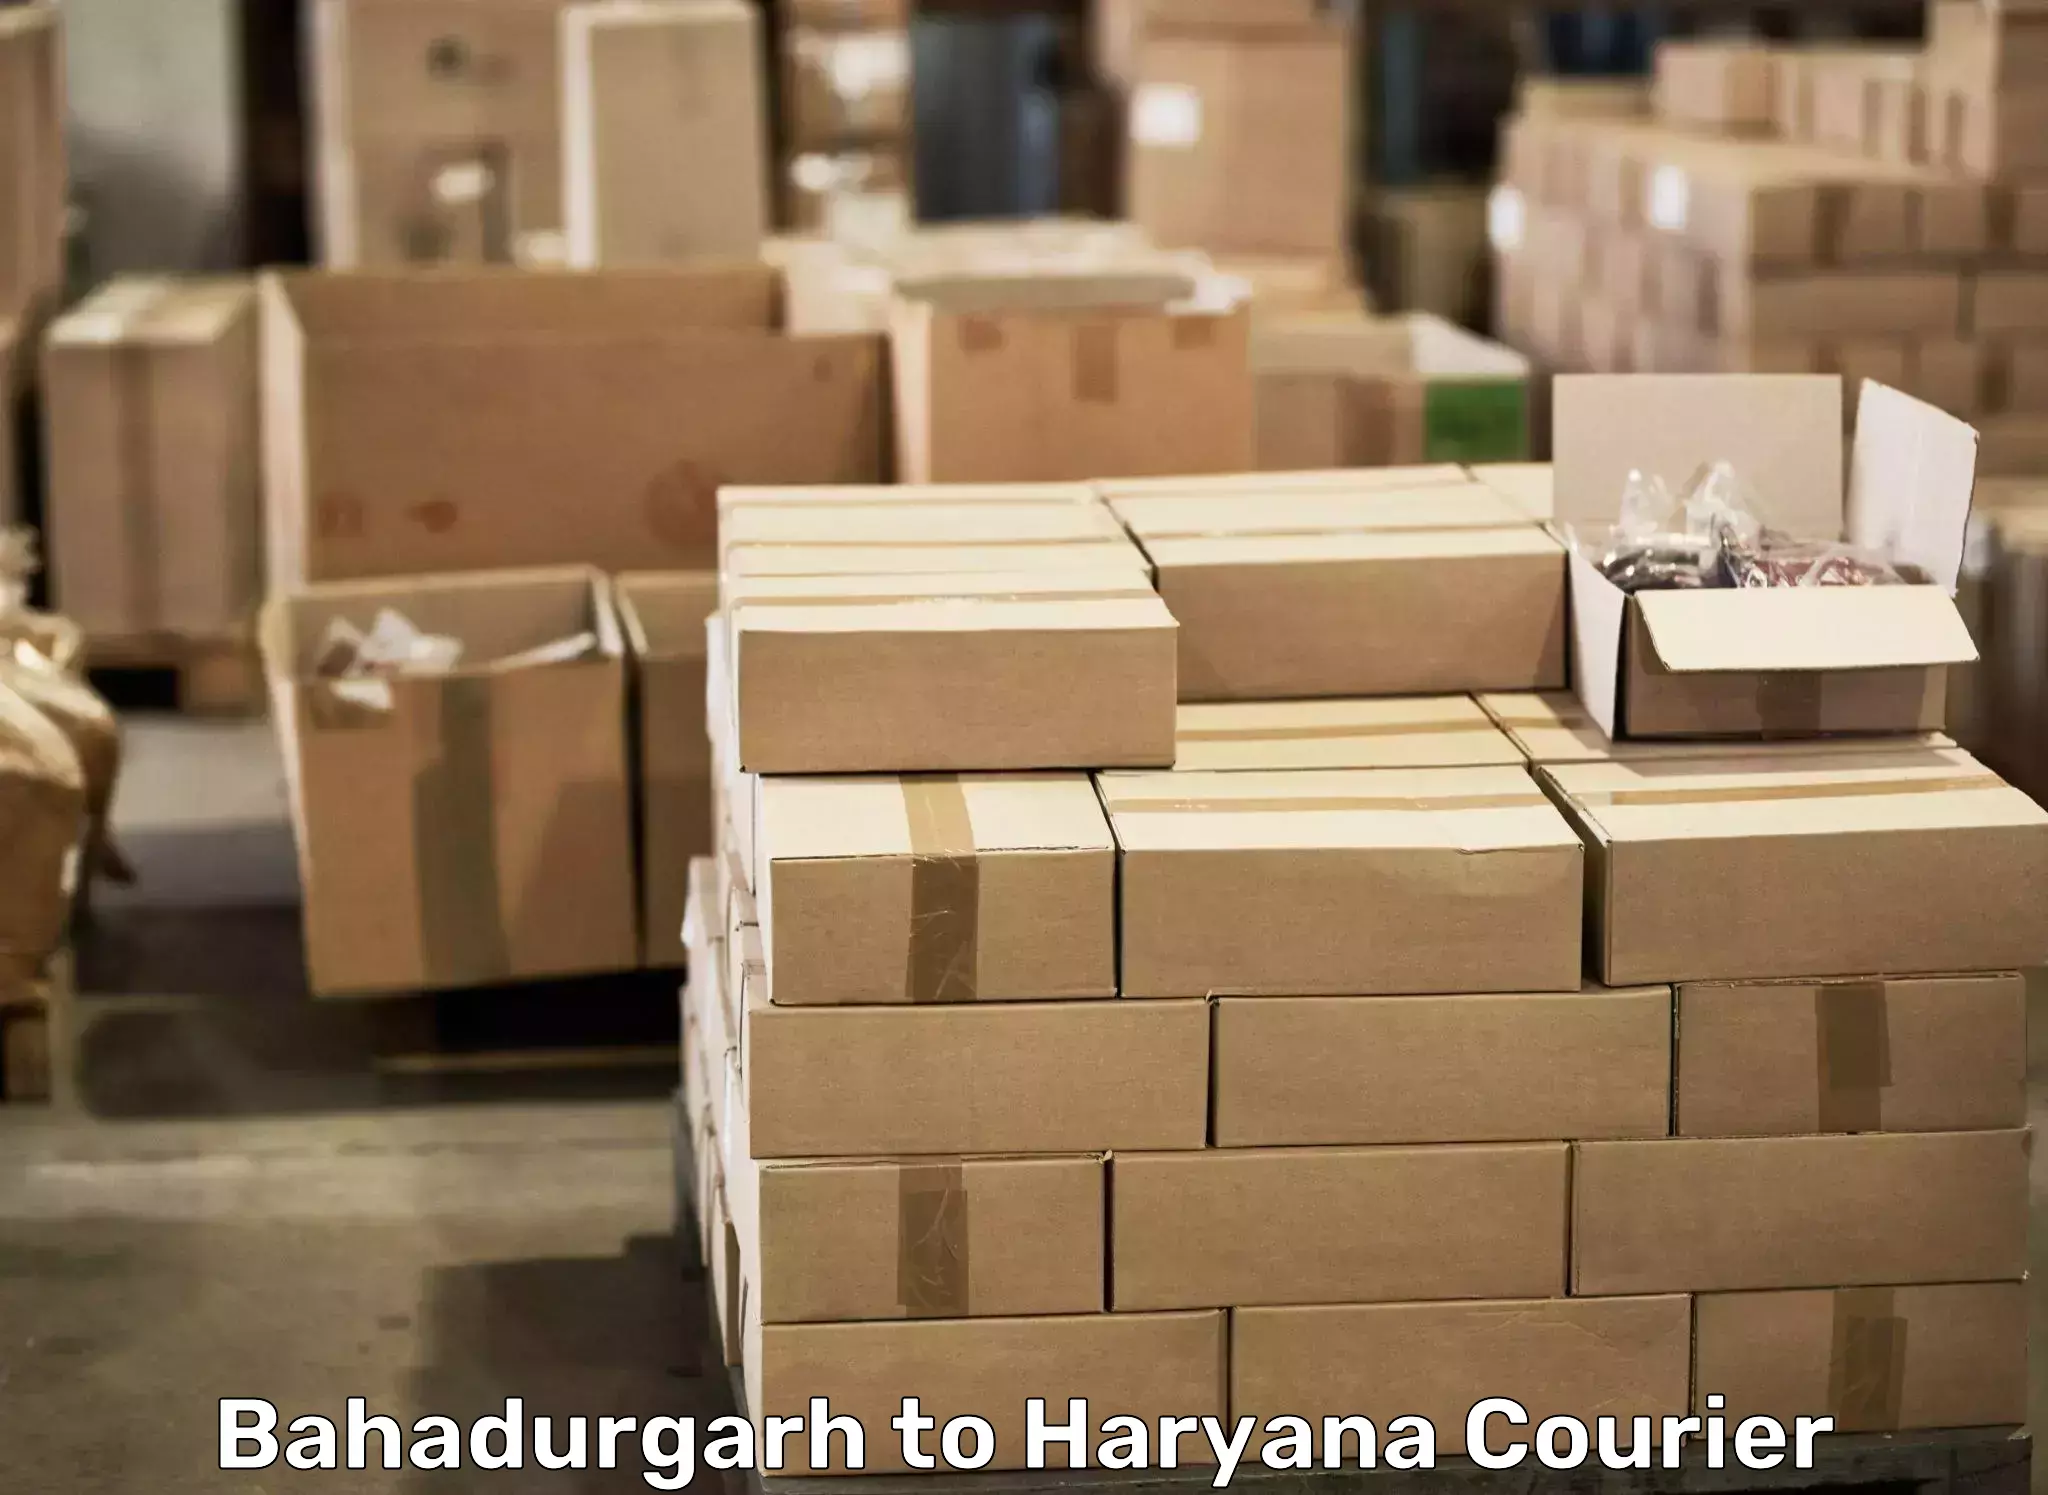 Professional moving company in Bahadurgarh to Jhajjar